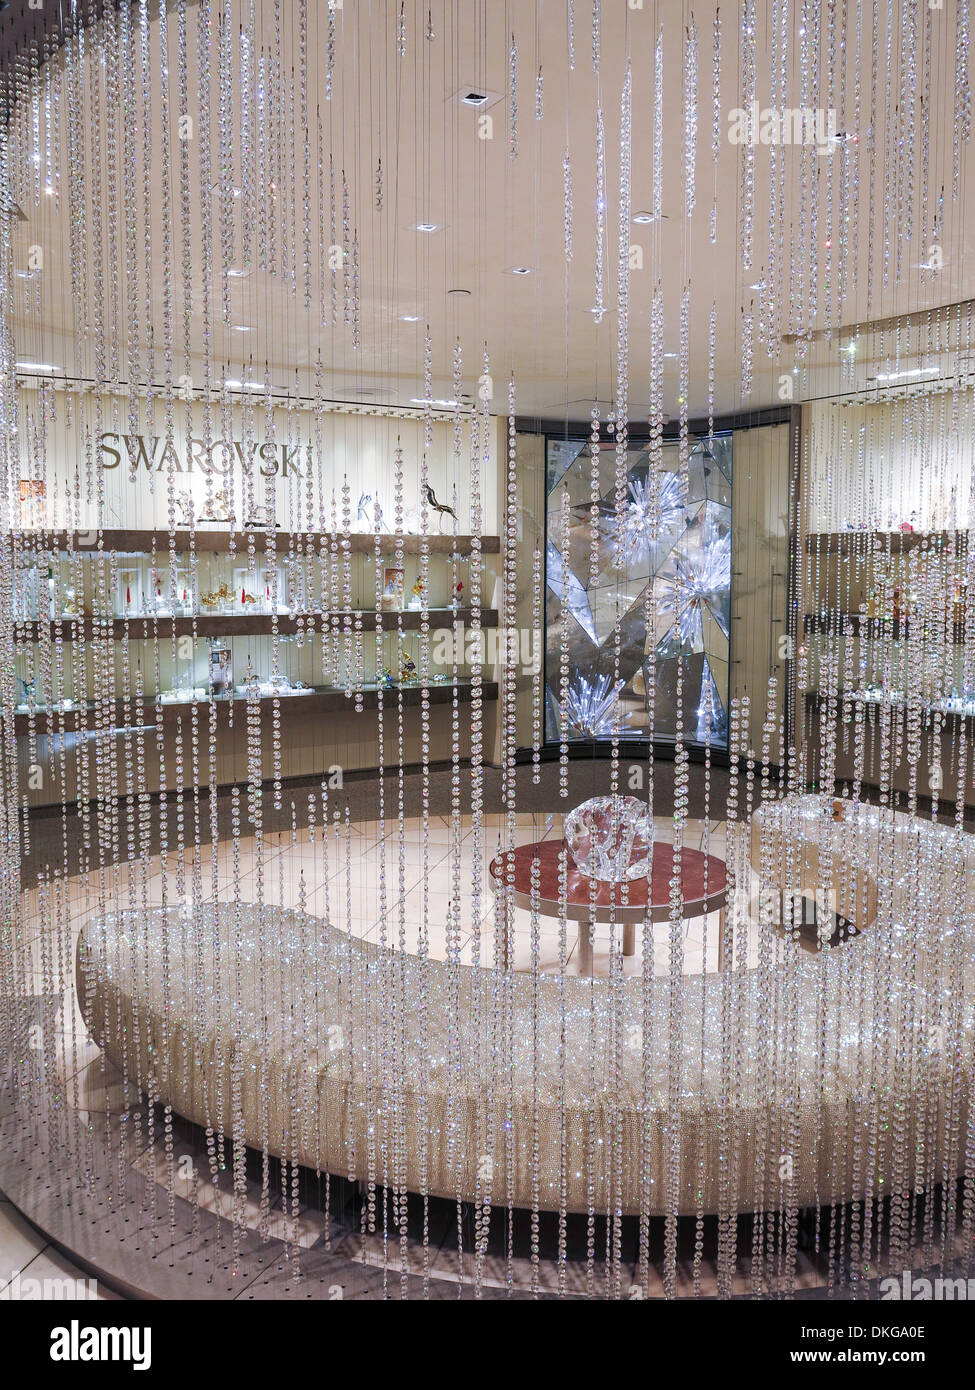 Swarovski Crystal Store, Rockefeller Center, NYC, USA Stock Photo - Alamy